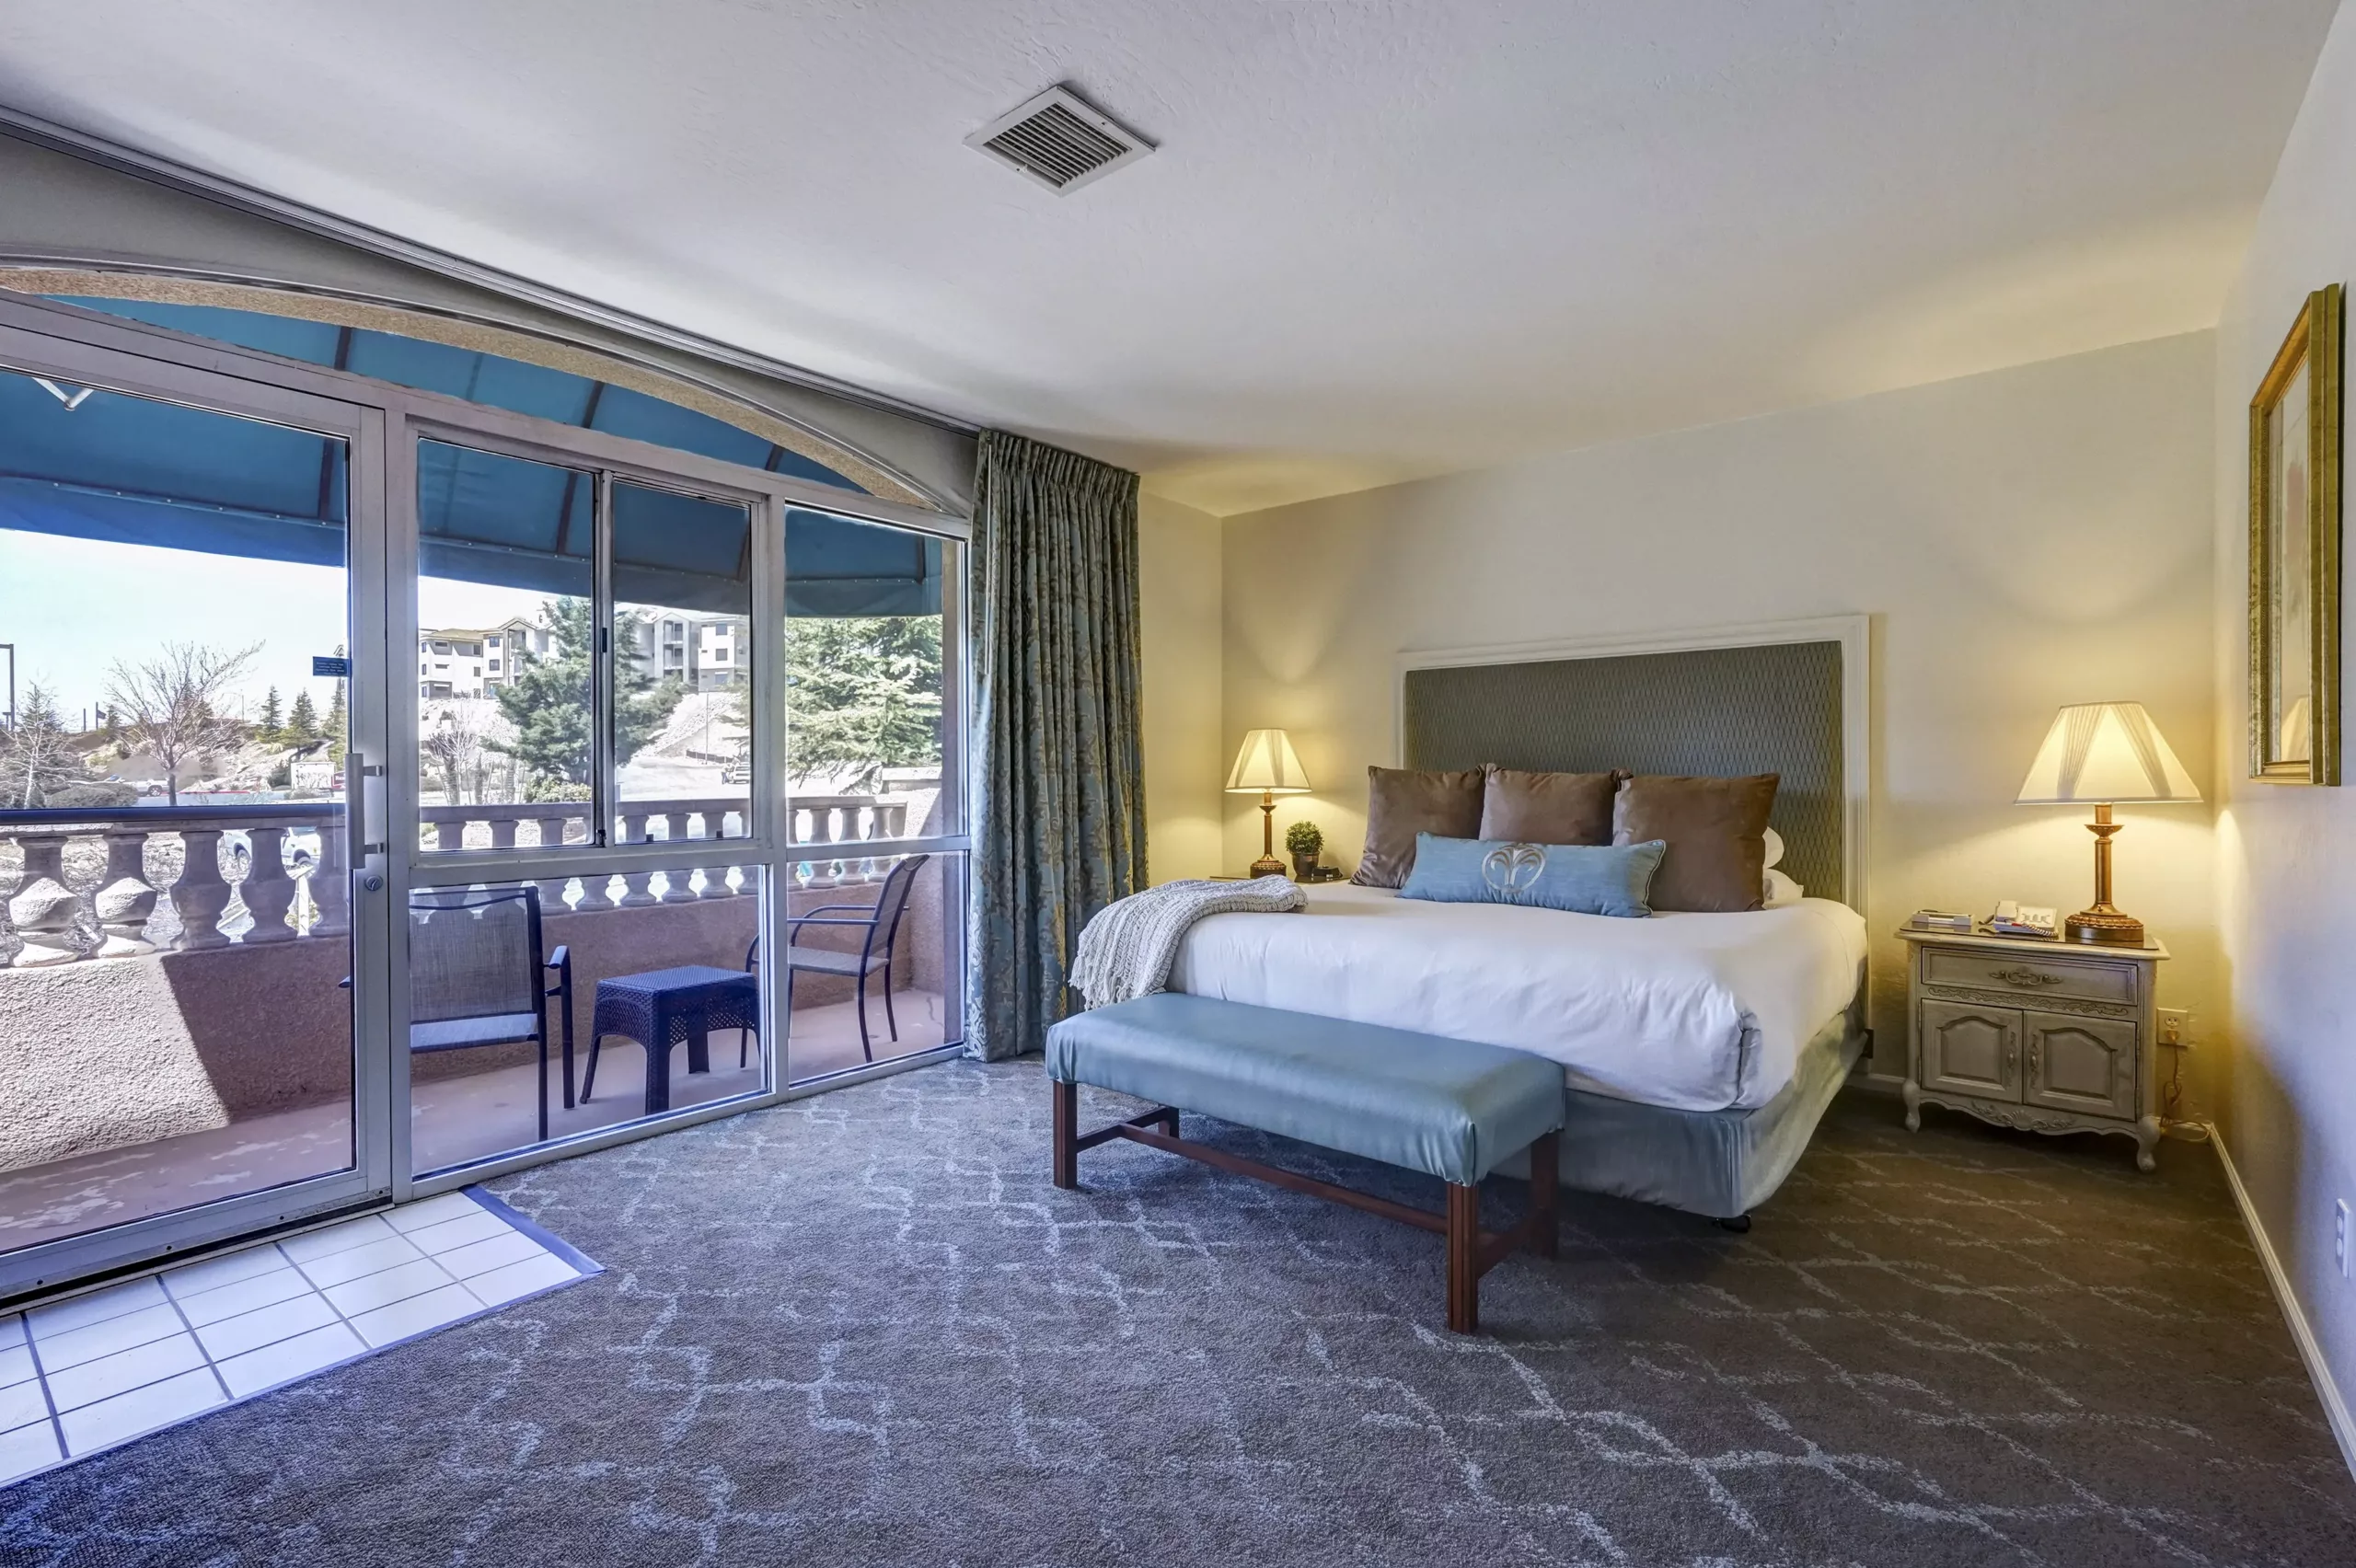 Luxury King Suite Room at Forest Villas Hotel in Prescott